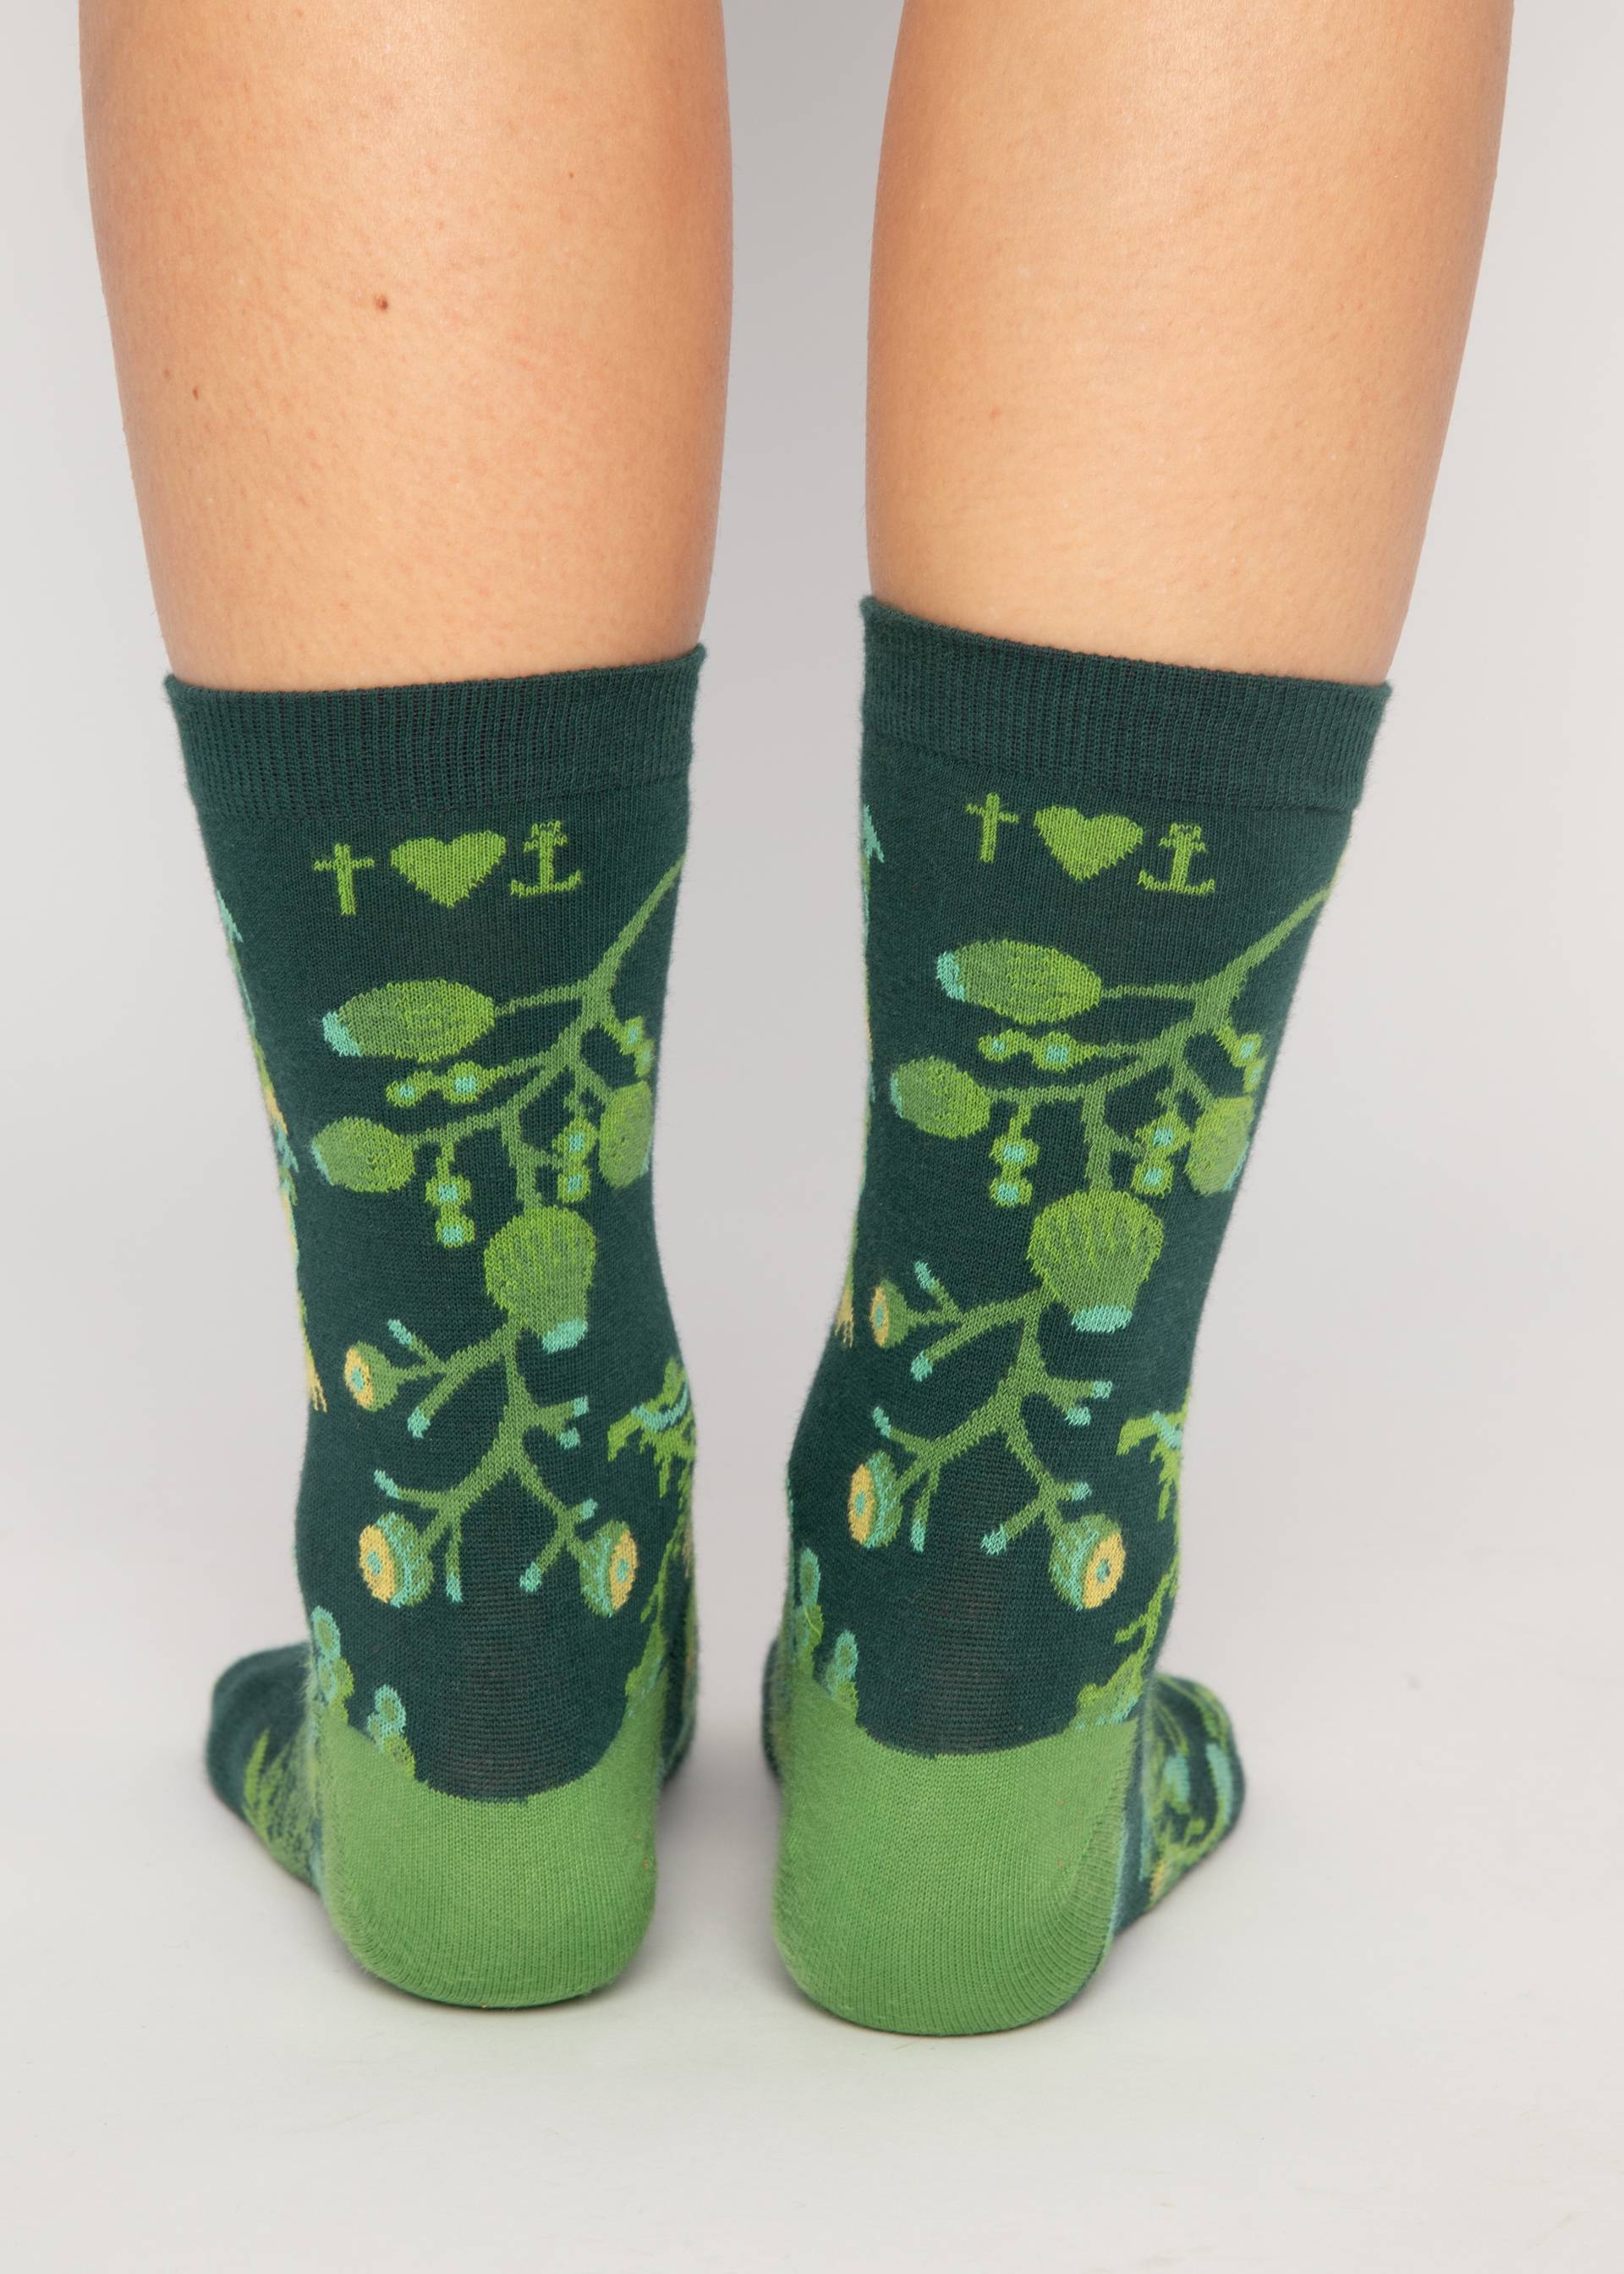 Baumwollsocken Sensational Steps, healing socks, Socken, Grün